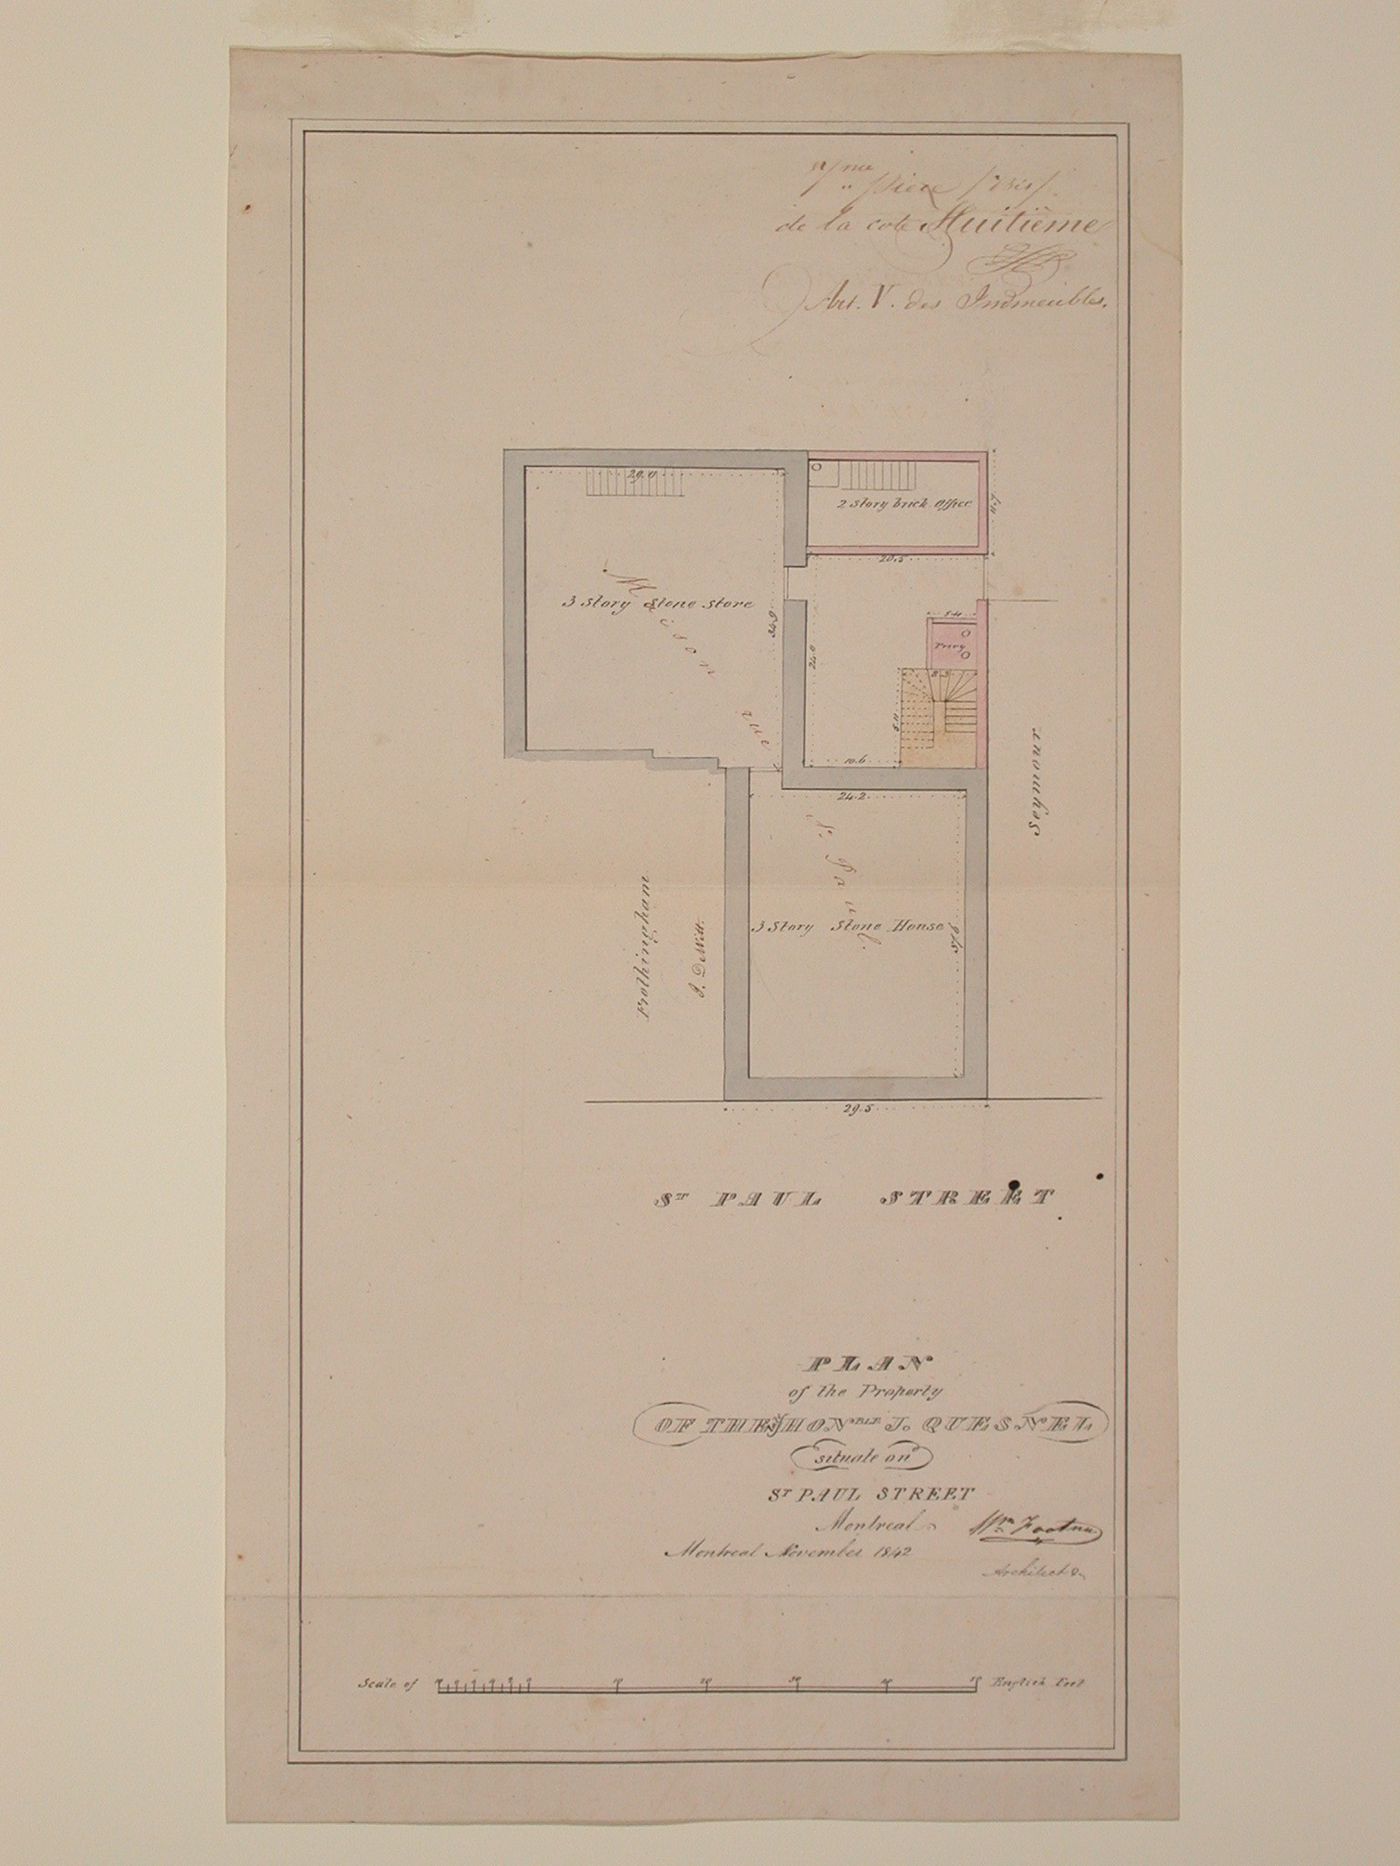 Property of J. Quesnel,Craig & Cote Sts. - plan